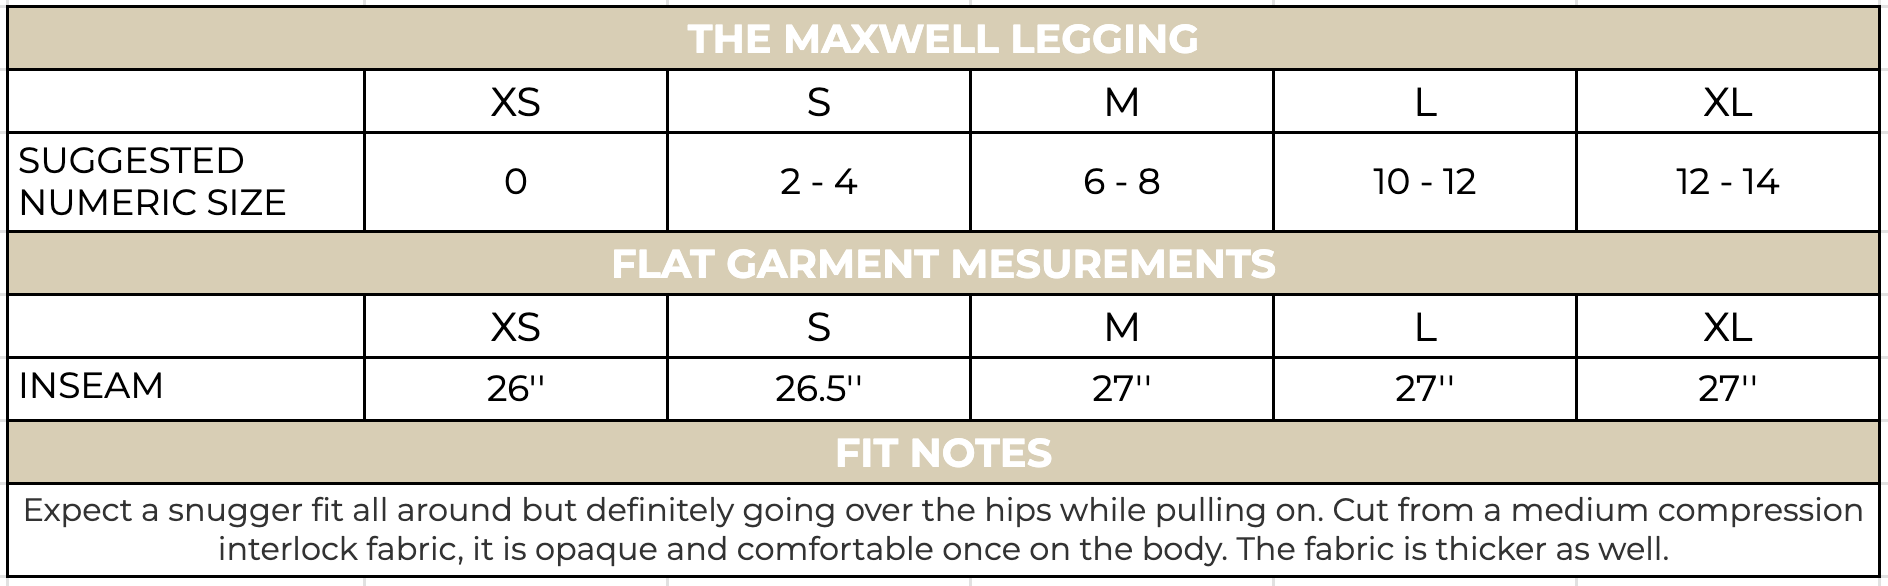 Maxwell Legging Size Chart